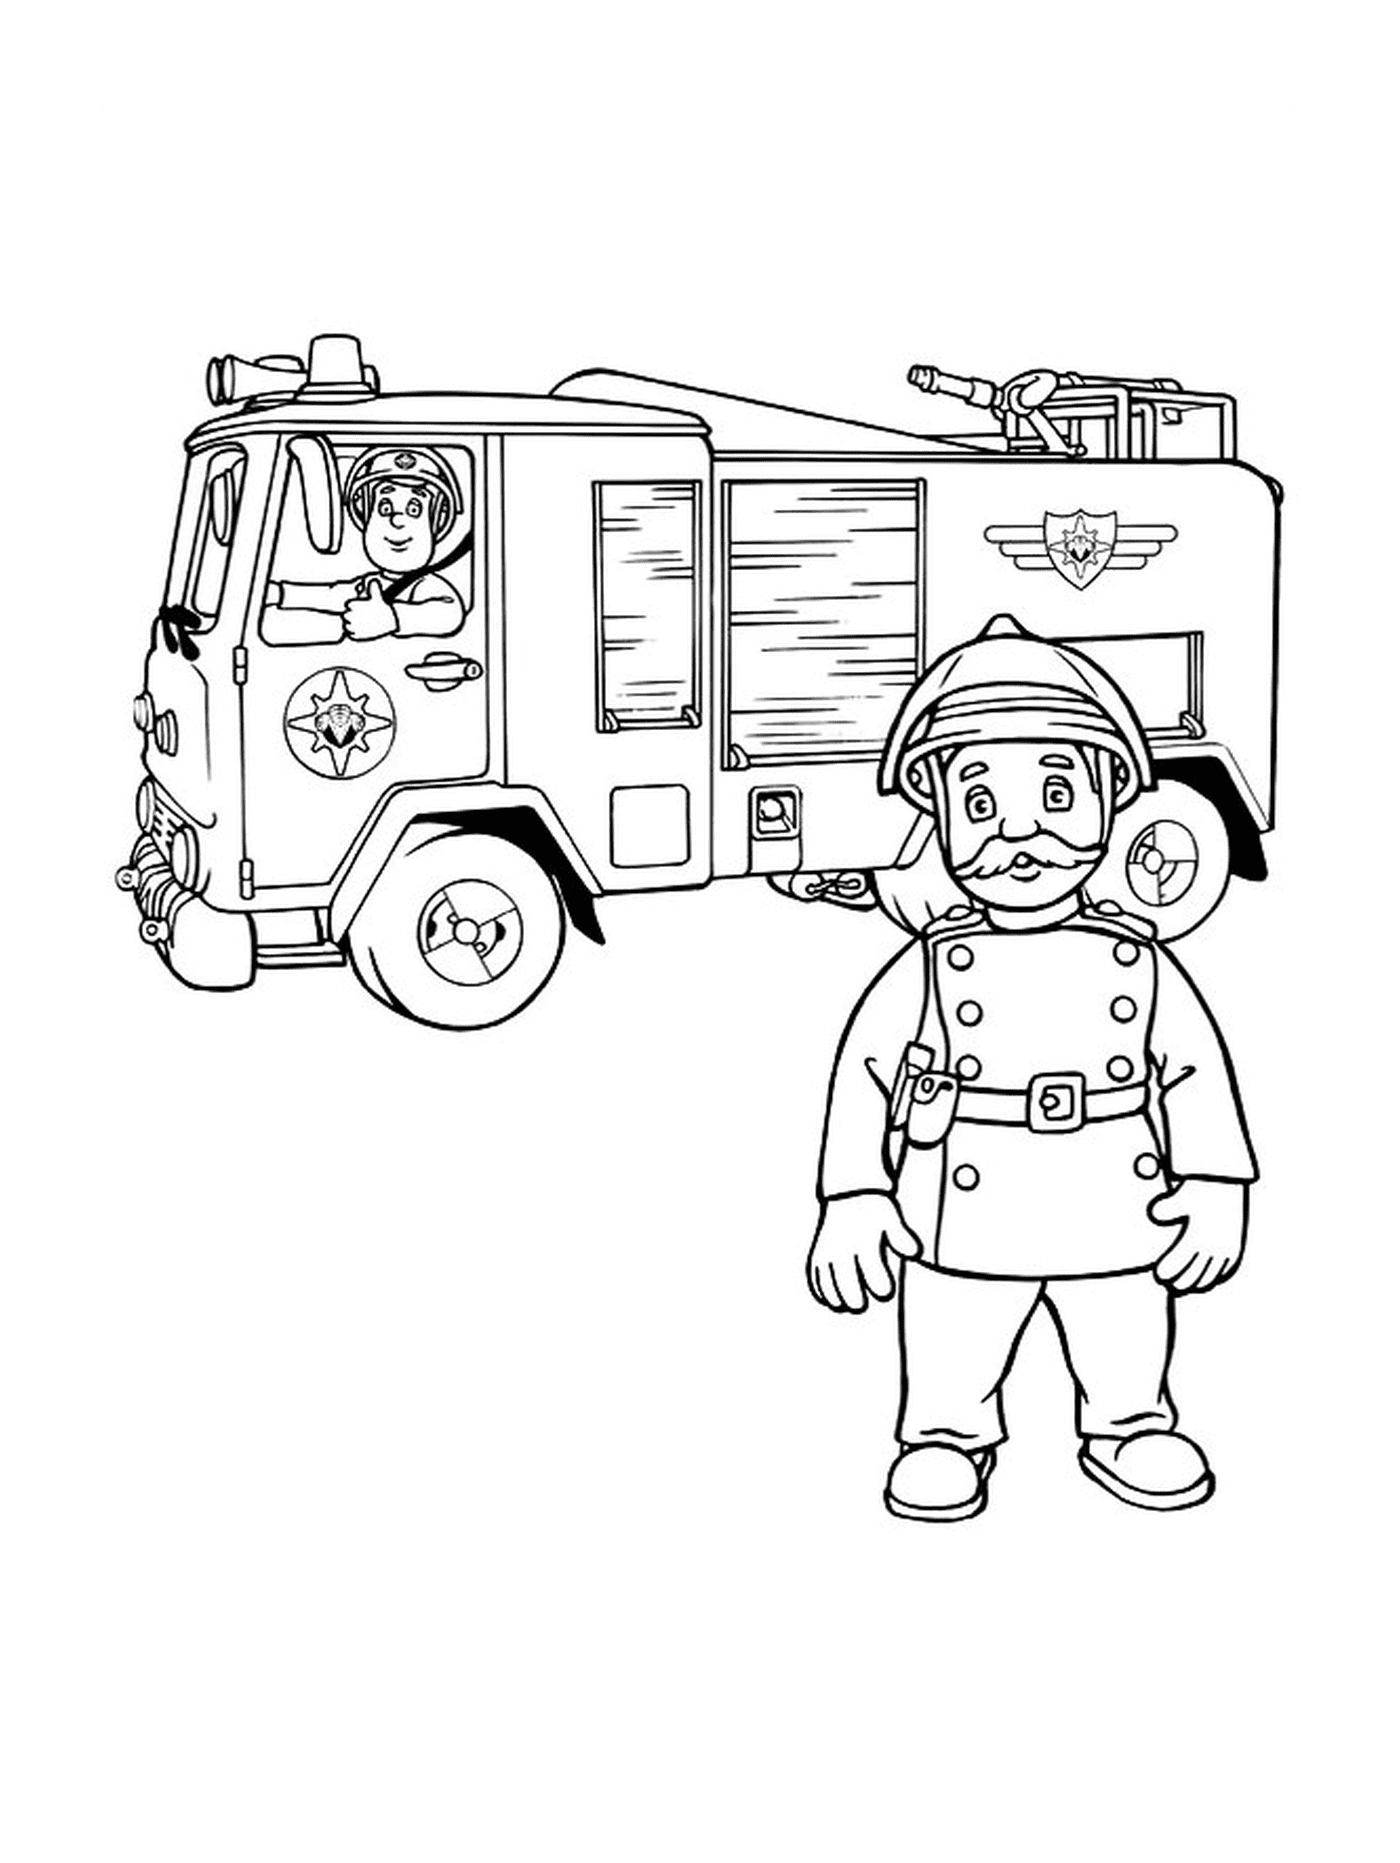  Firefighter accanto a un camion dei pompieri 